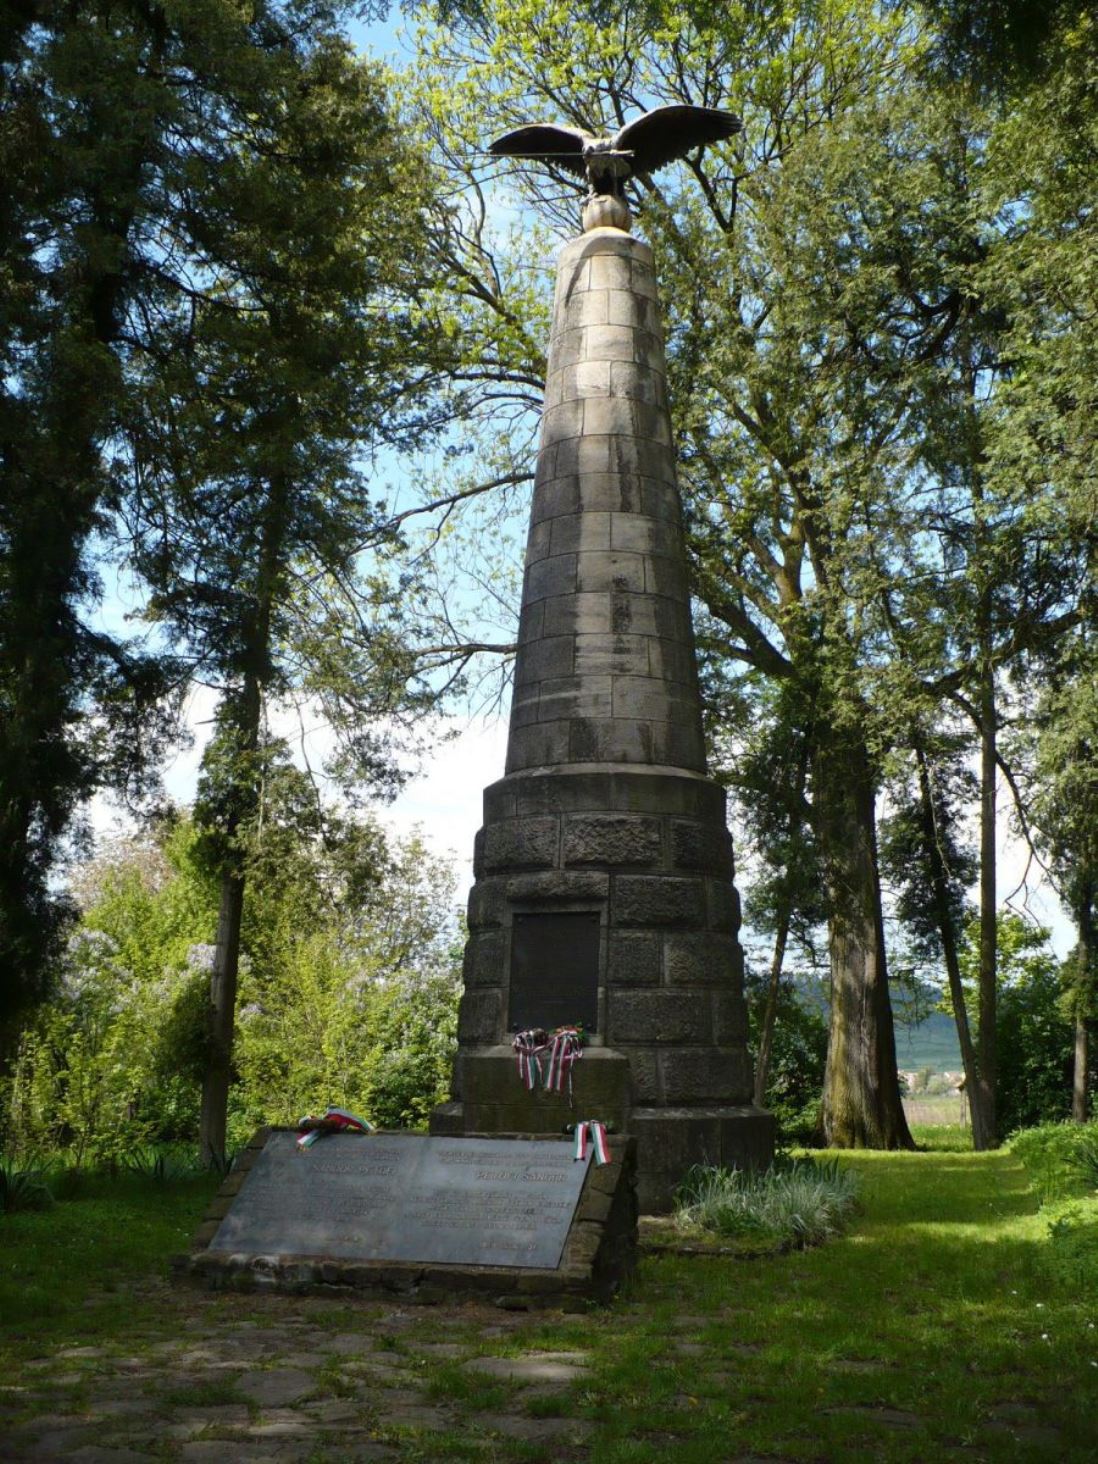 1848 Revolution monument